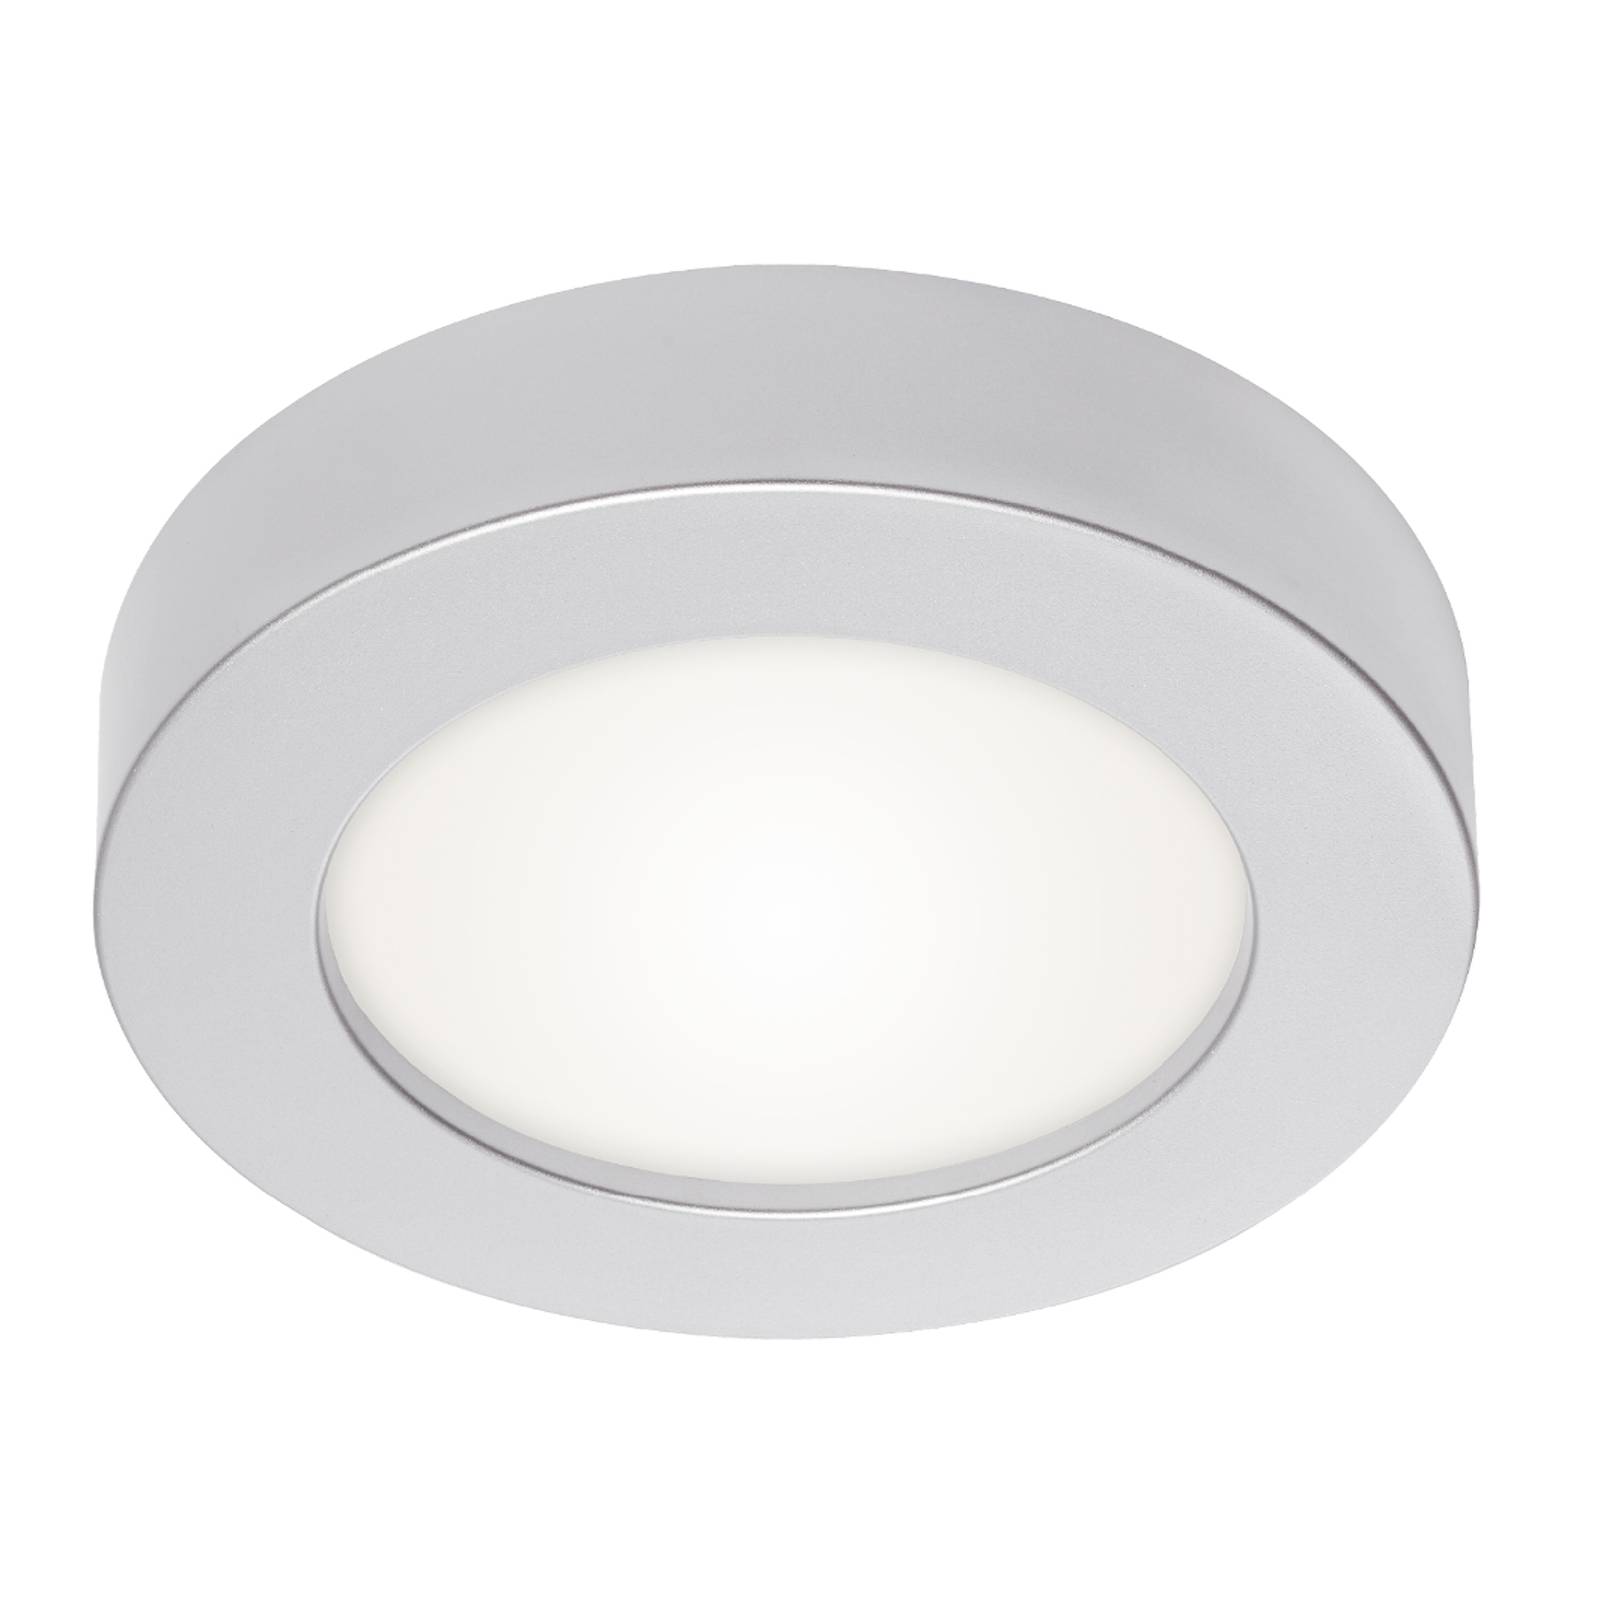 Prios Edwina LED ceiling light, silver, 24.5 cm